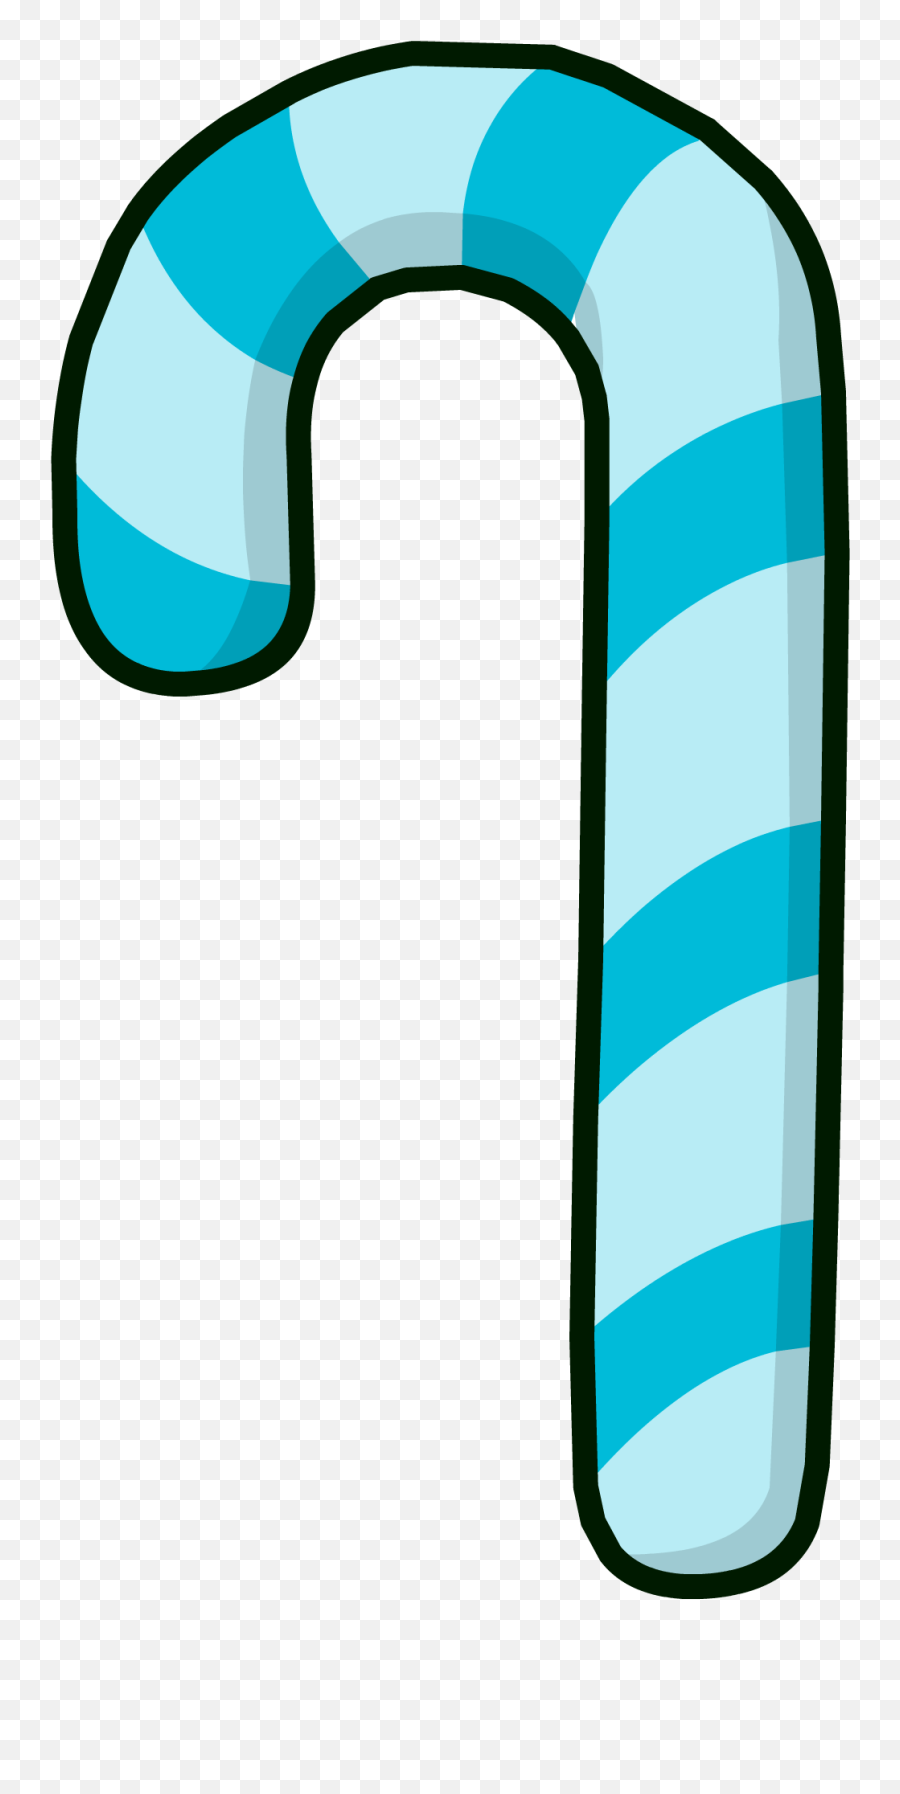 Ice Candy Cane - Blue Candy Cane Png Transparent Emoji,Candy Cane Transparent